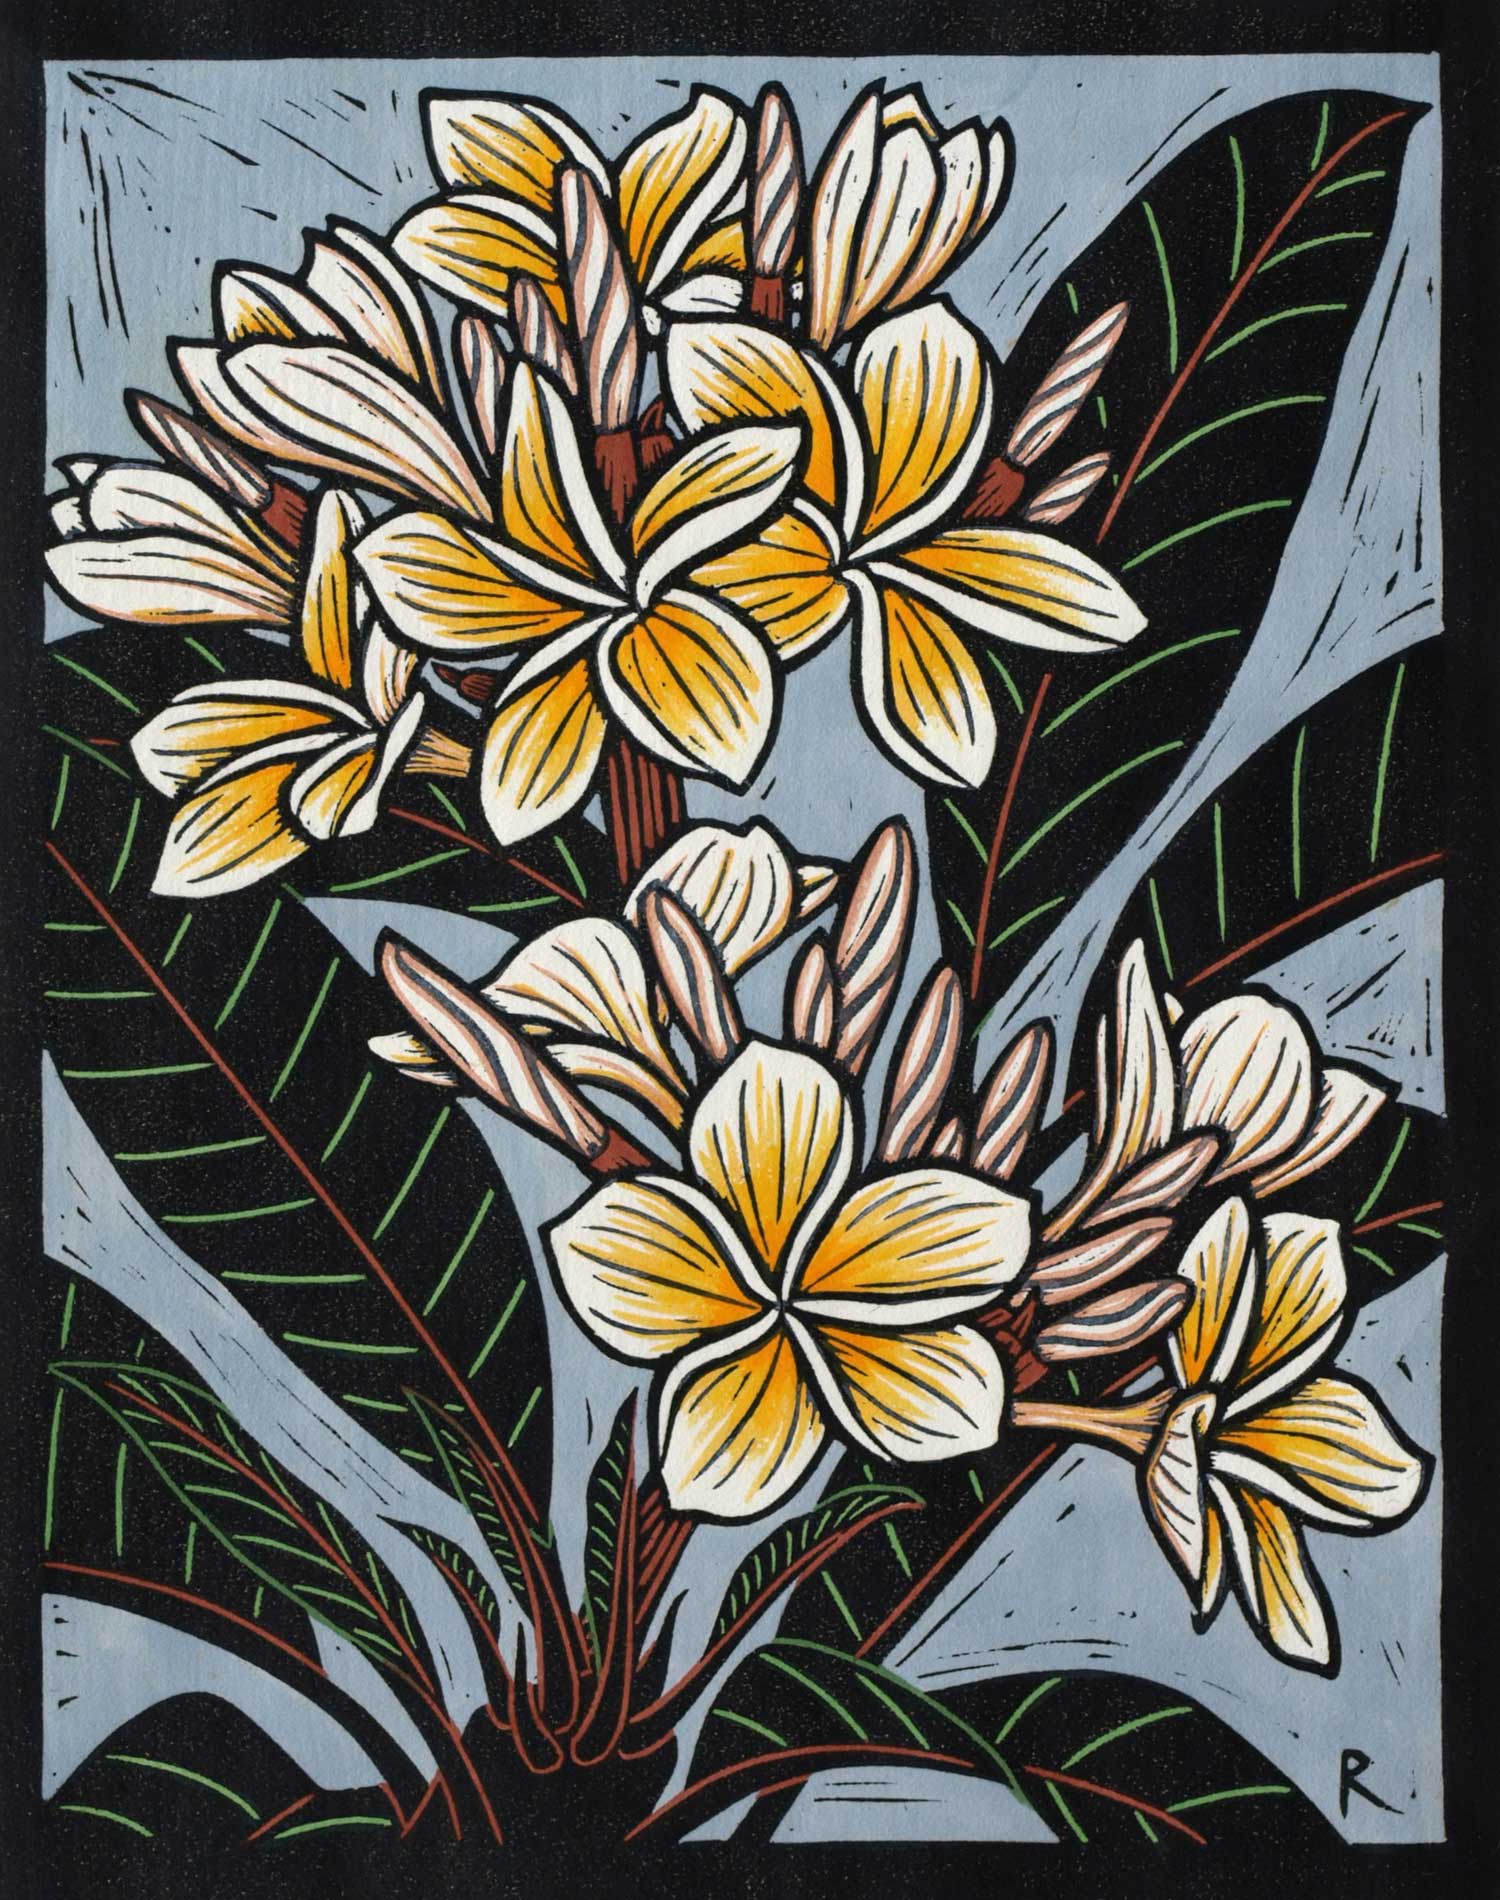 frangipani-2-linocut-rachel-newling.jpg